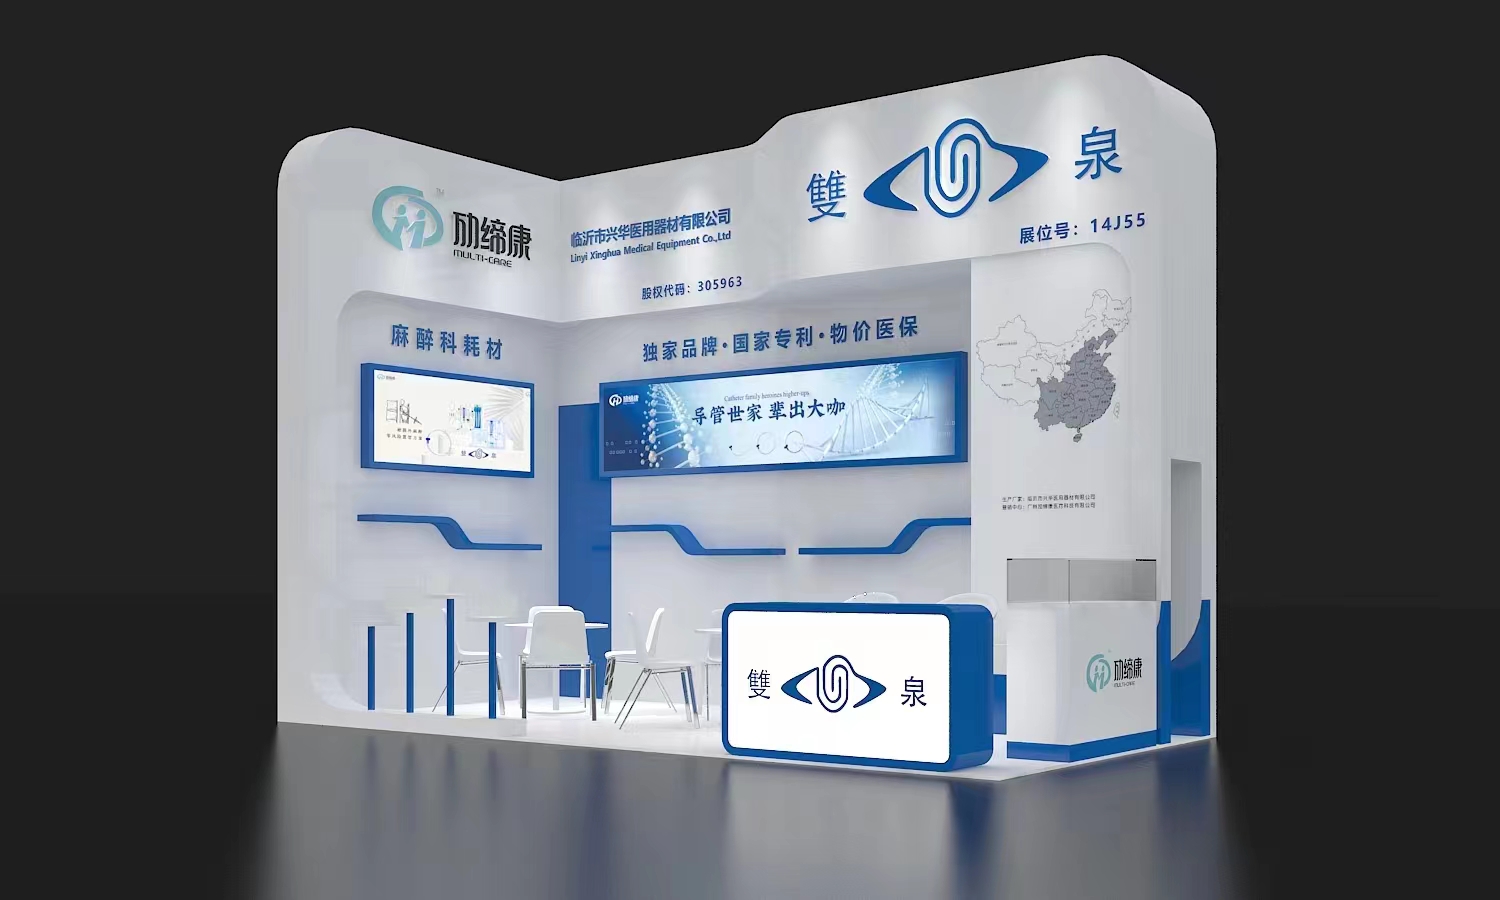 The 86st China International Medical Equipment  Fair